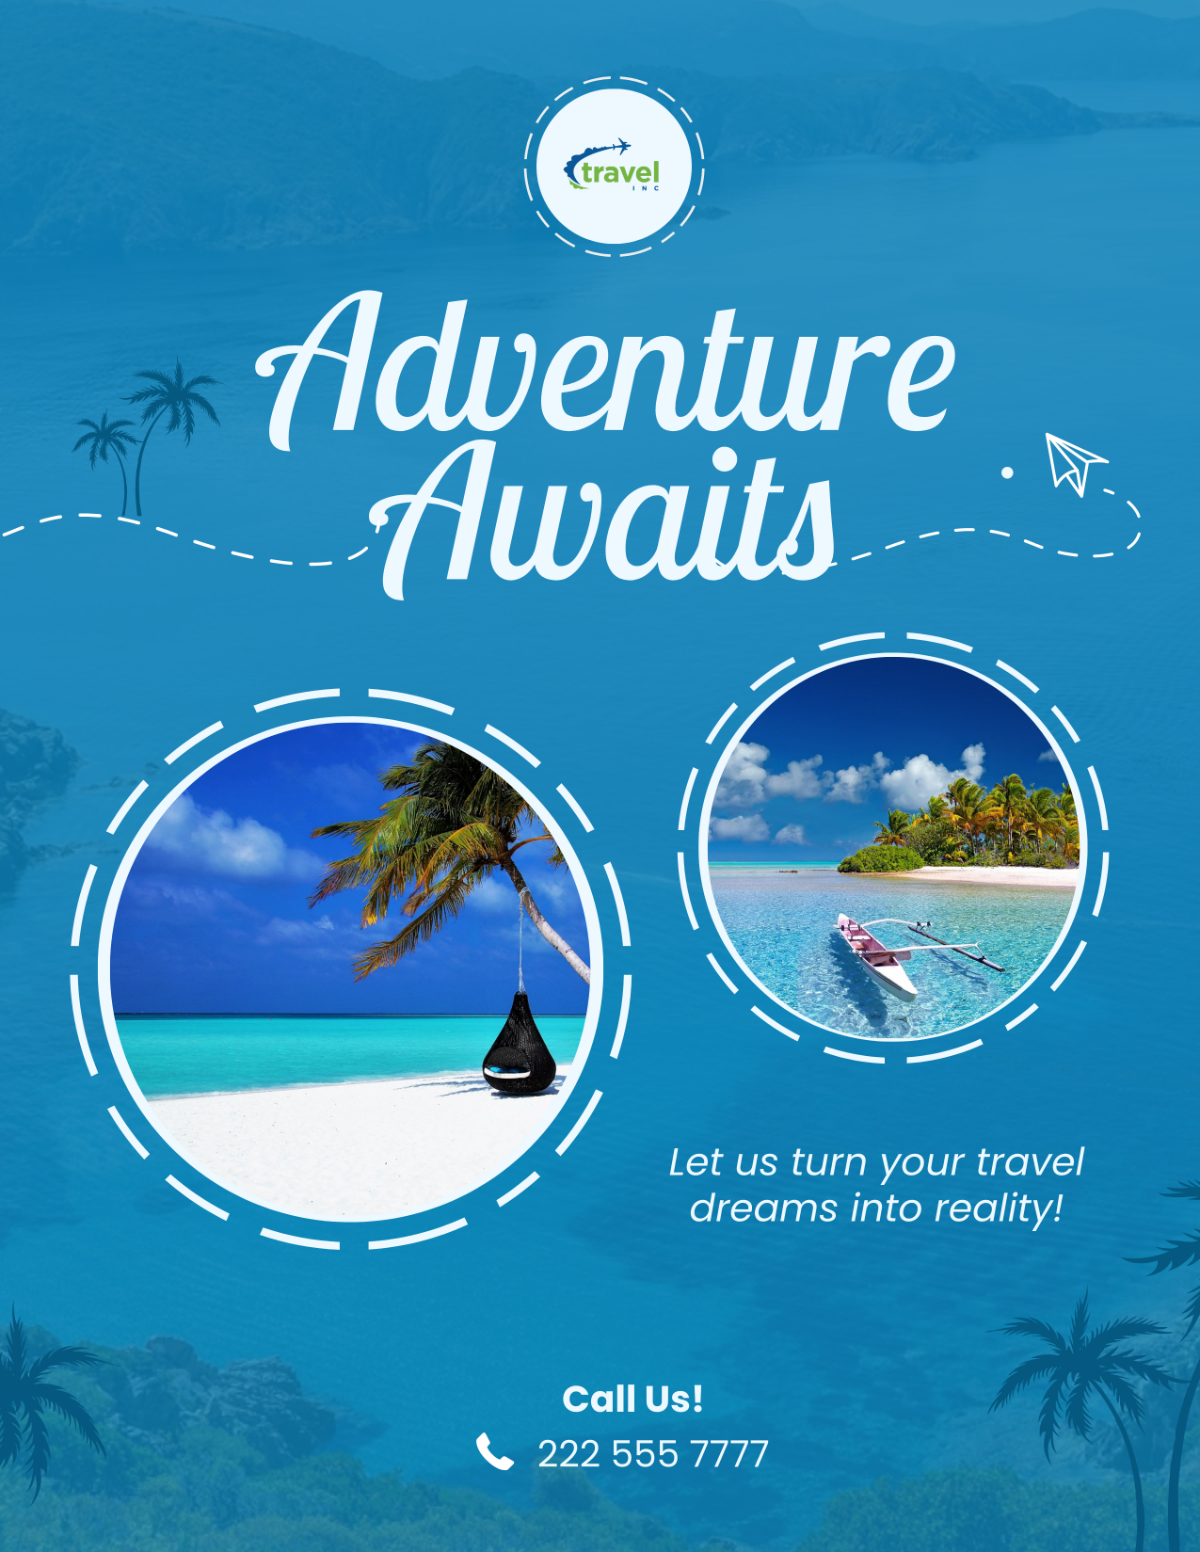 Travel Agency Marketing Flyer Template